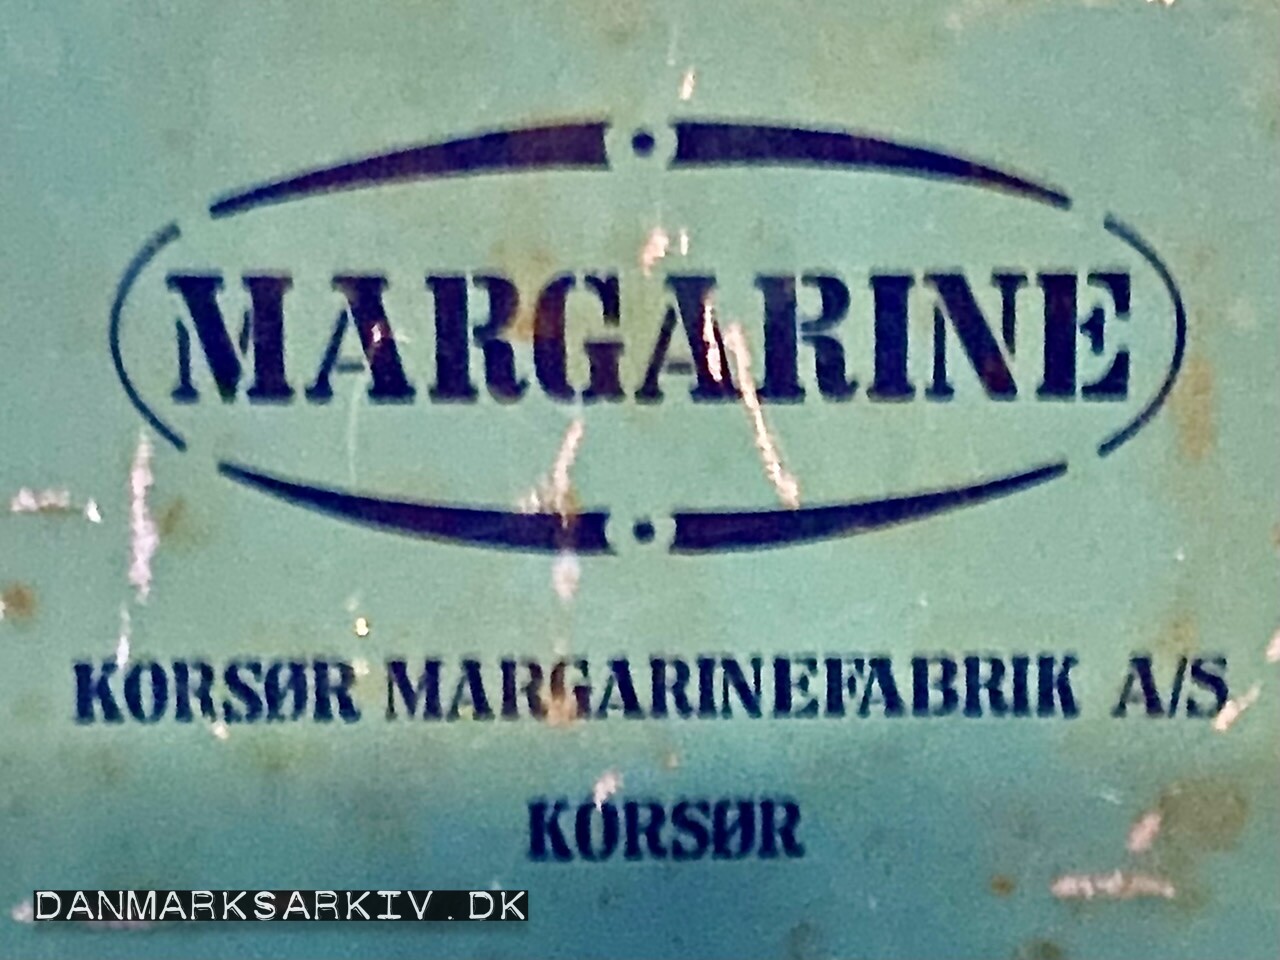 Korsør Margarinefabrik